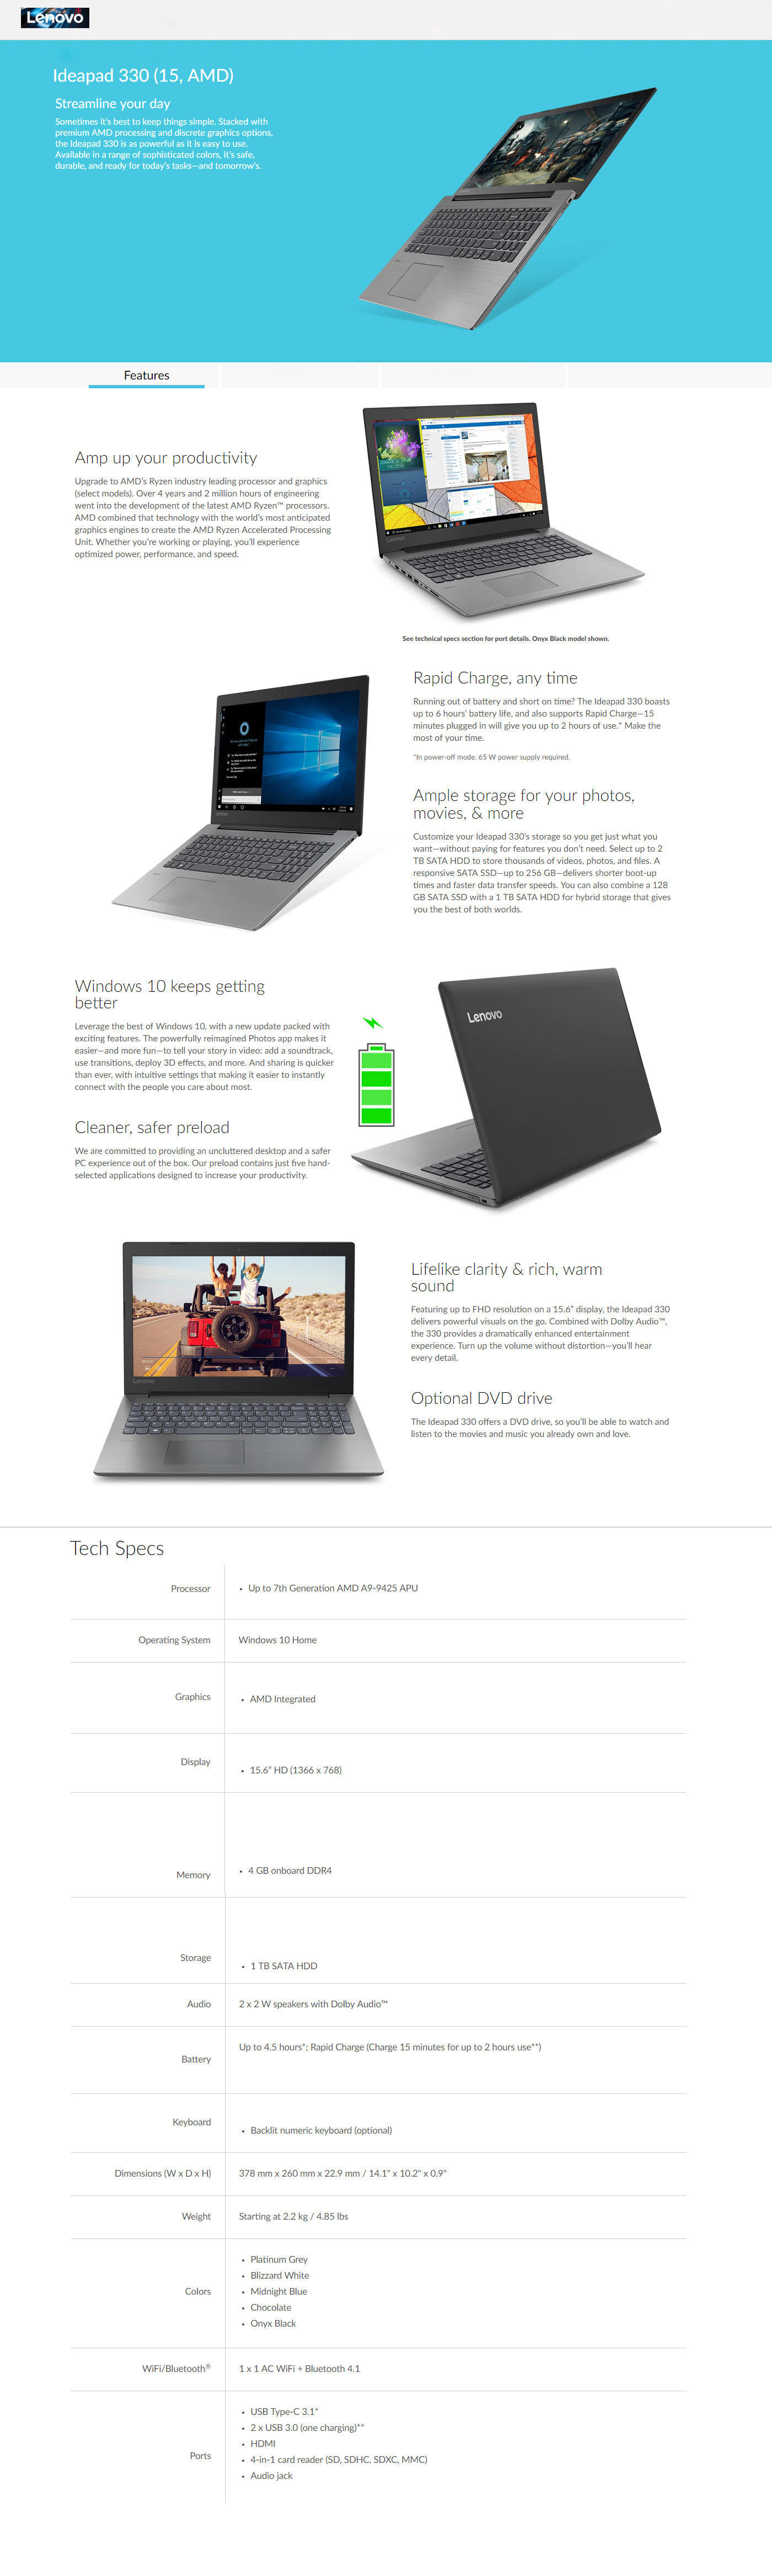  Buy Online Lenovo Ideapad 330 15.6inch Laptop - Platinum Grey - 81D600LAIN (AMD A9-9425, 4GB, 1TB, Windows 10)